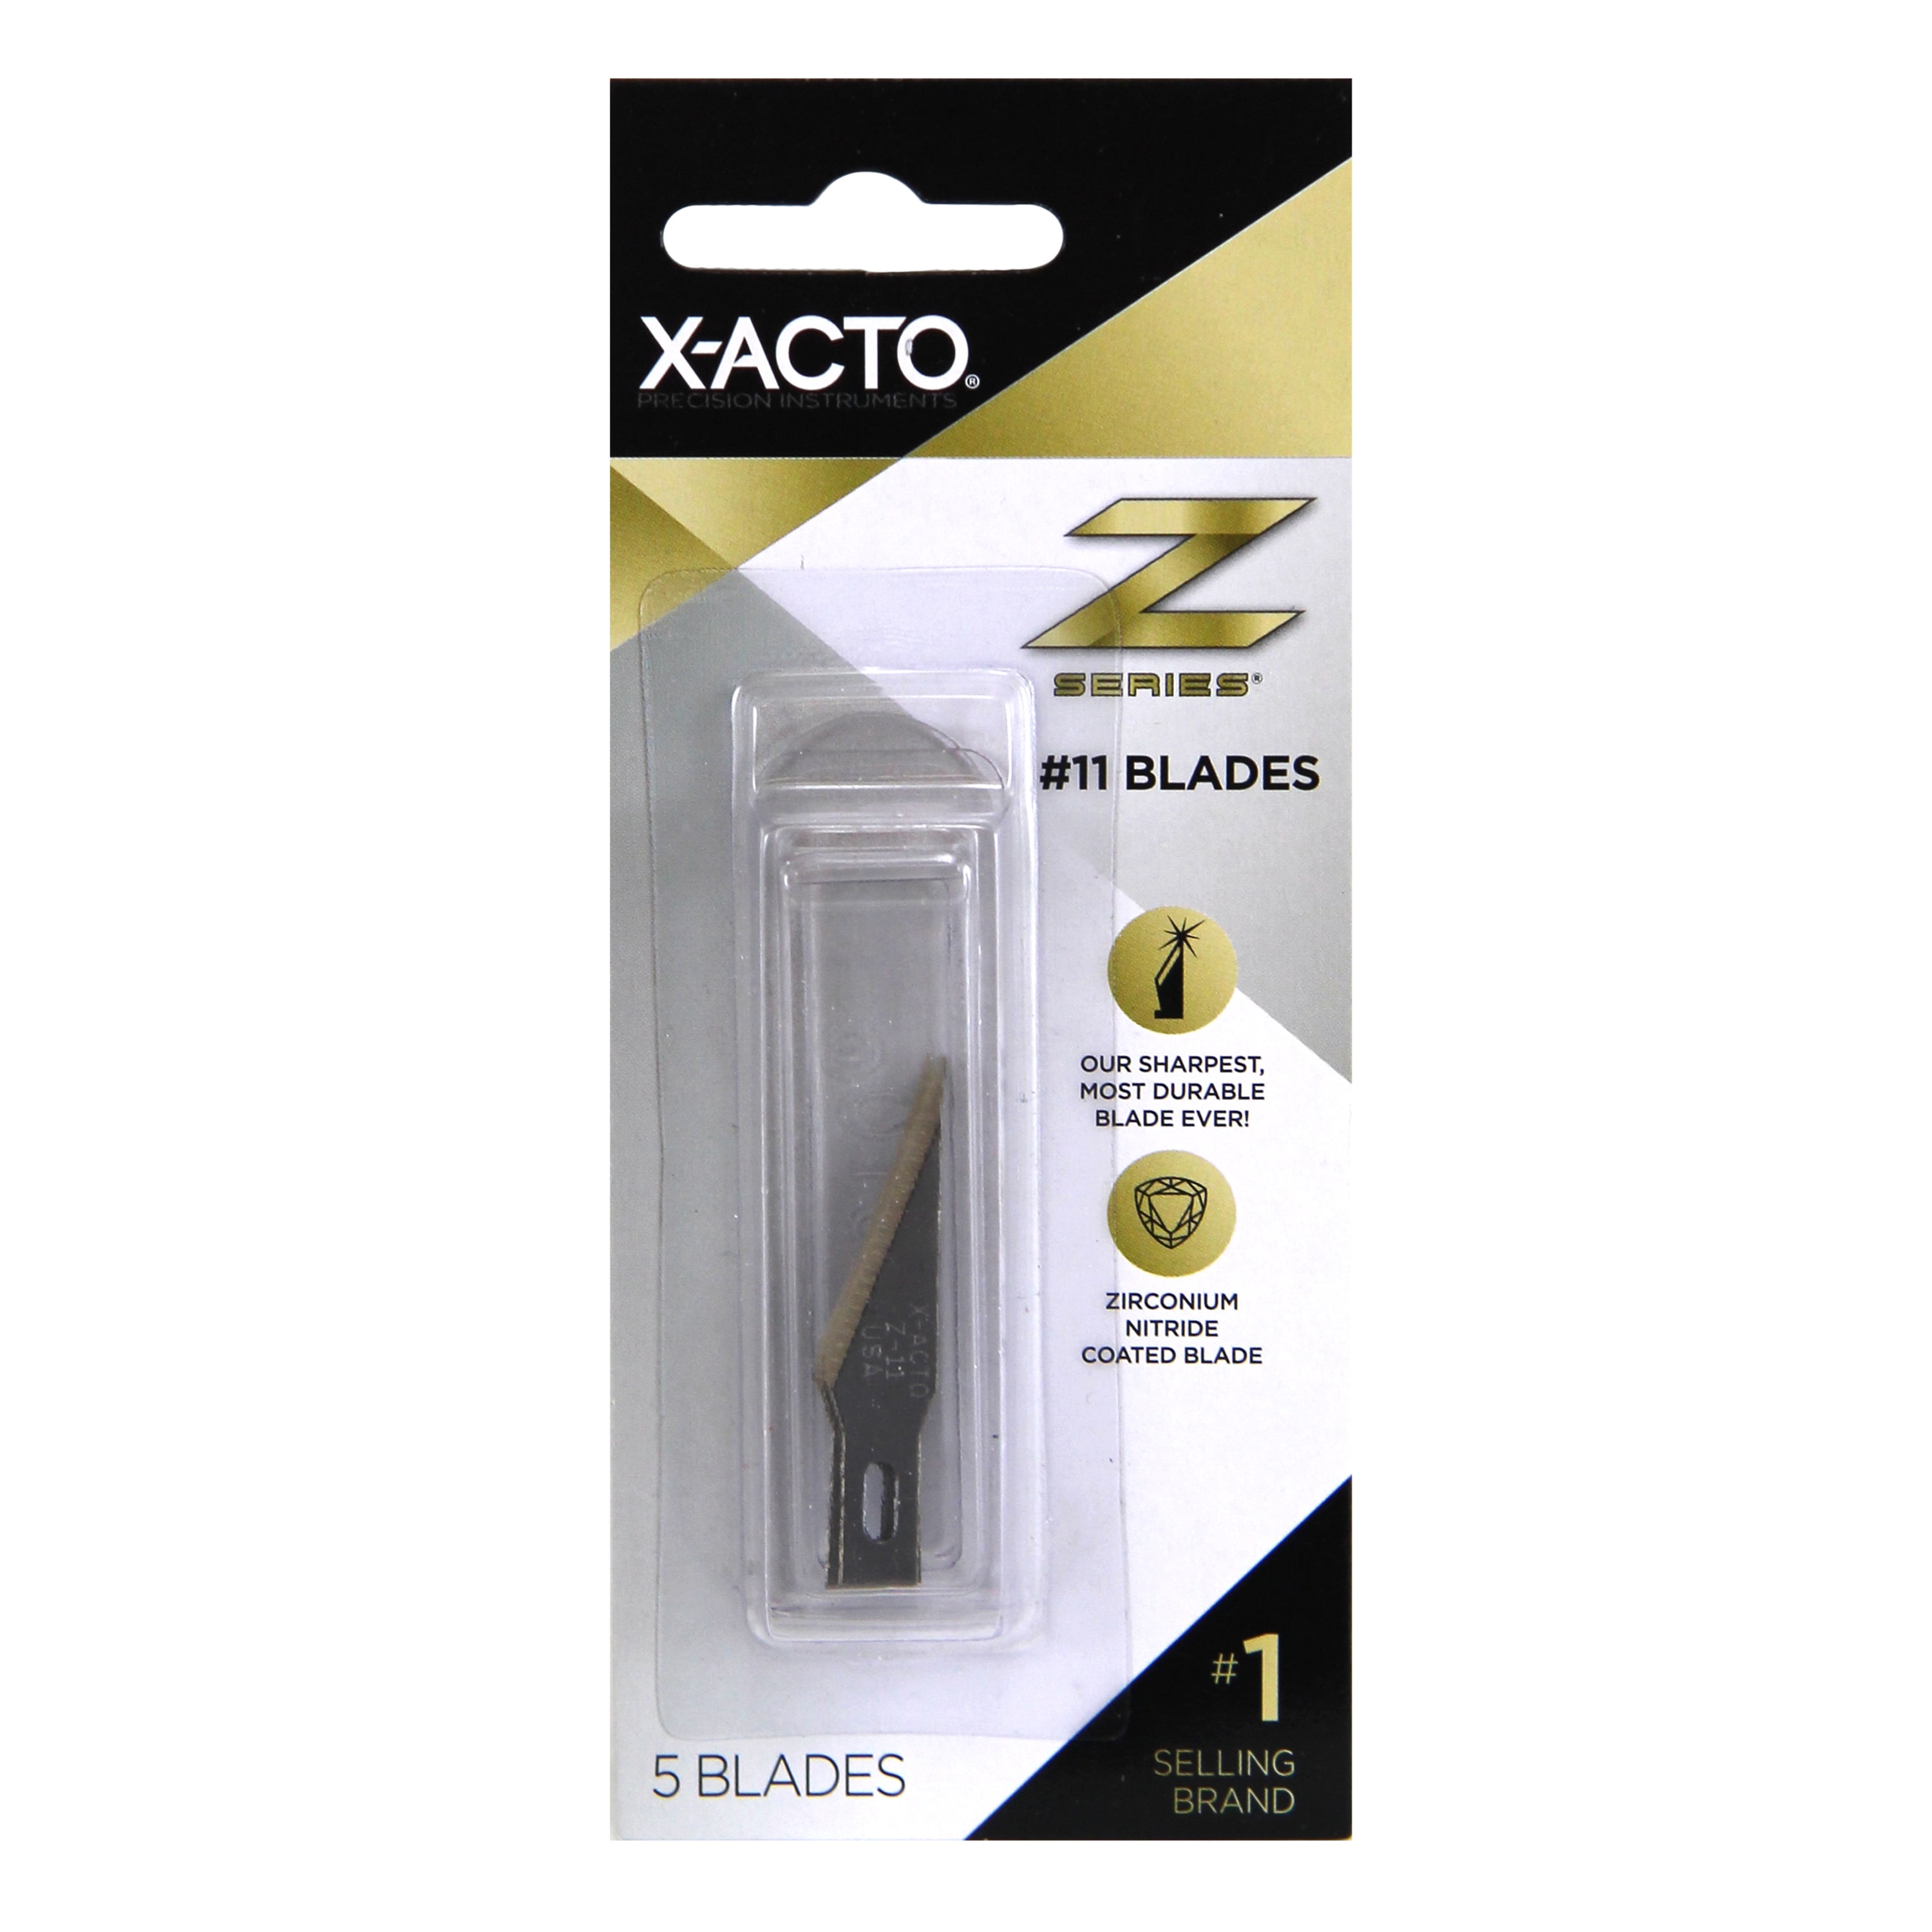 X-ACTO PACK OF 100 X BLADES No 11 PRECISION SCORING BLADES CRAFT XACTO 